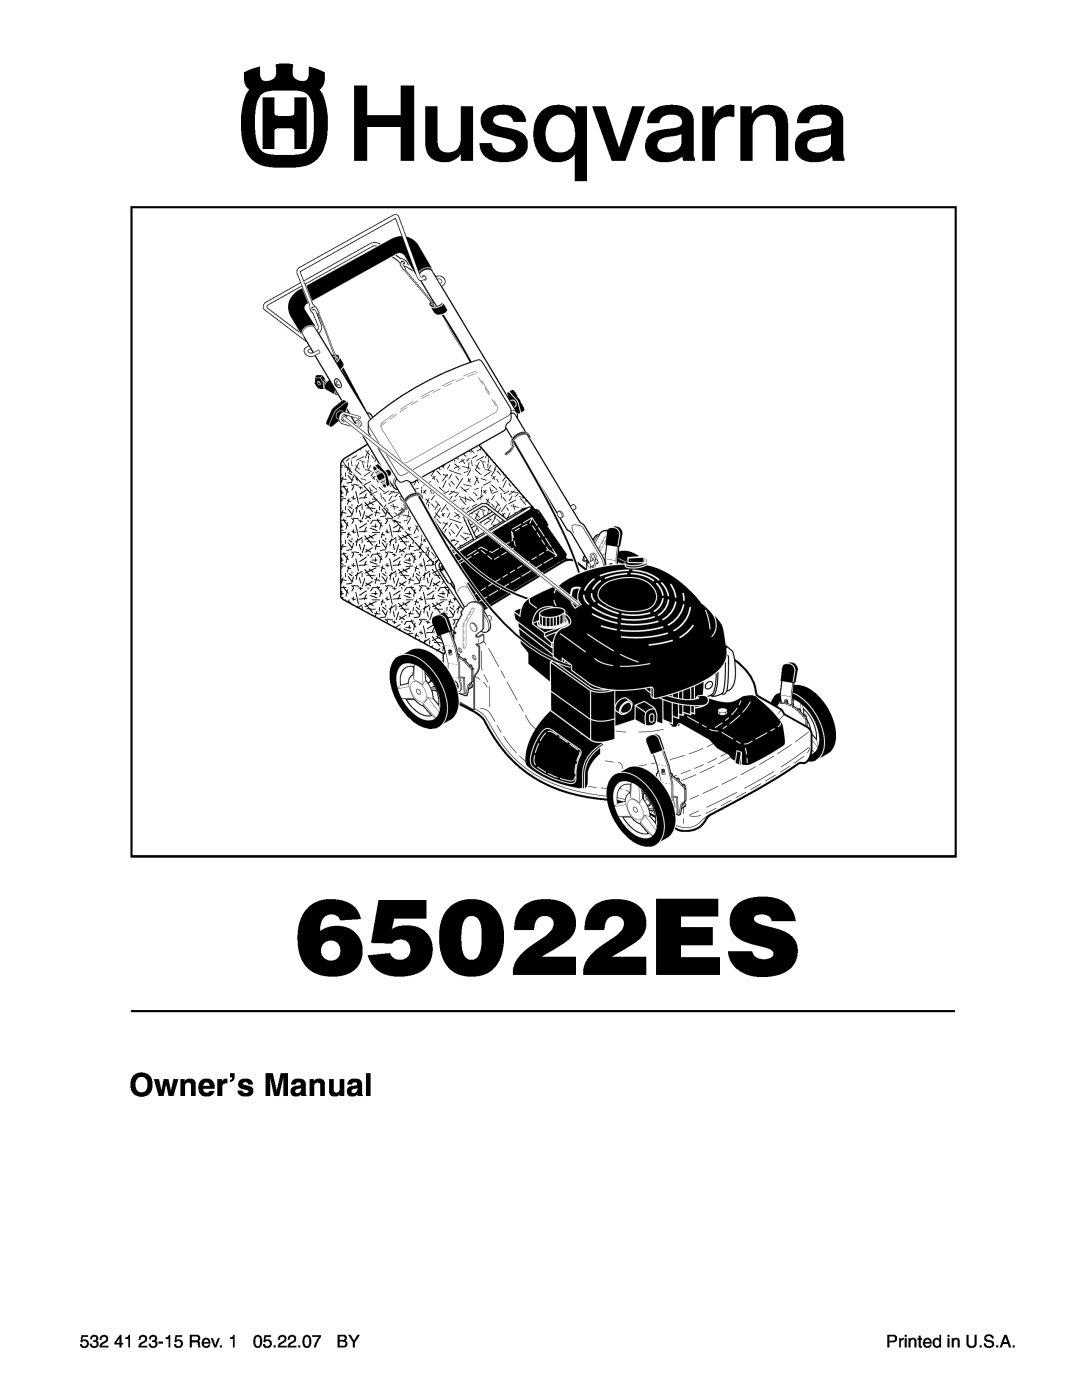 Husqvarna 65022ES owner manual 